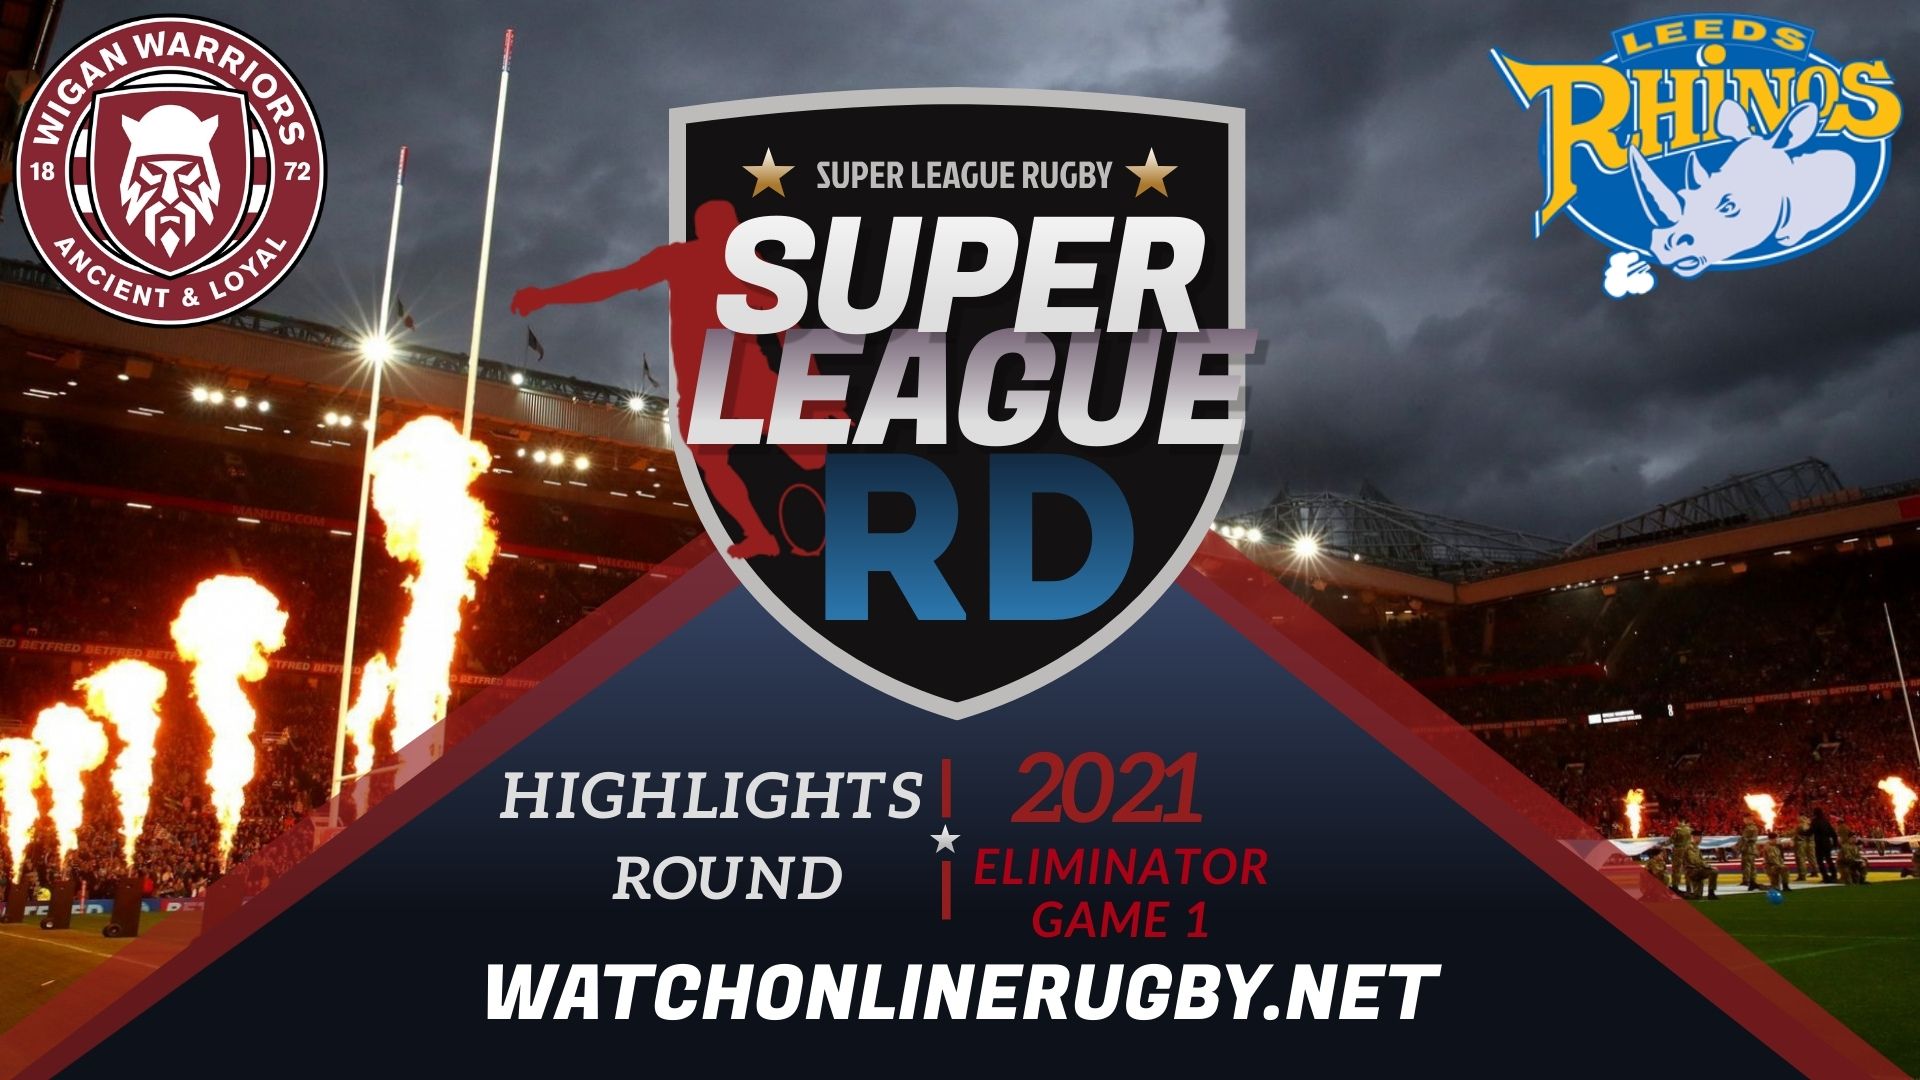 Wigan Warriors Vs Leeds Rhinos Super League Rugby 2021 Eliminator Game 2